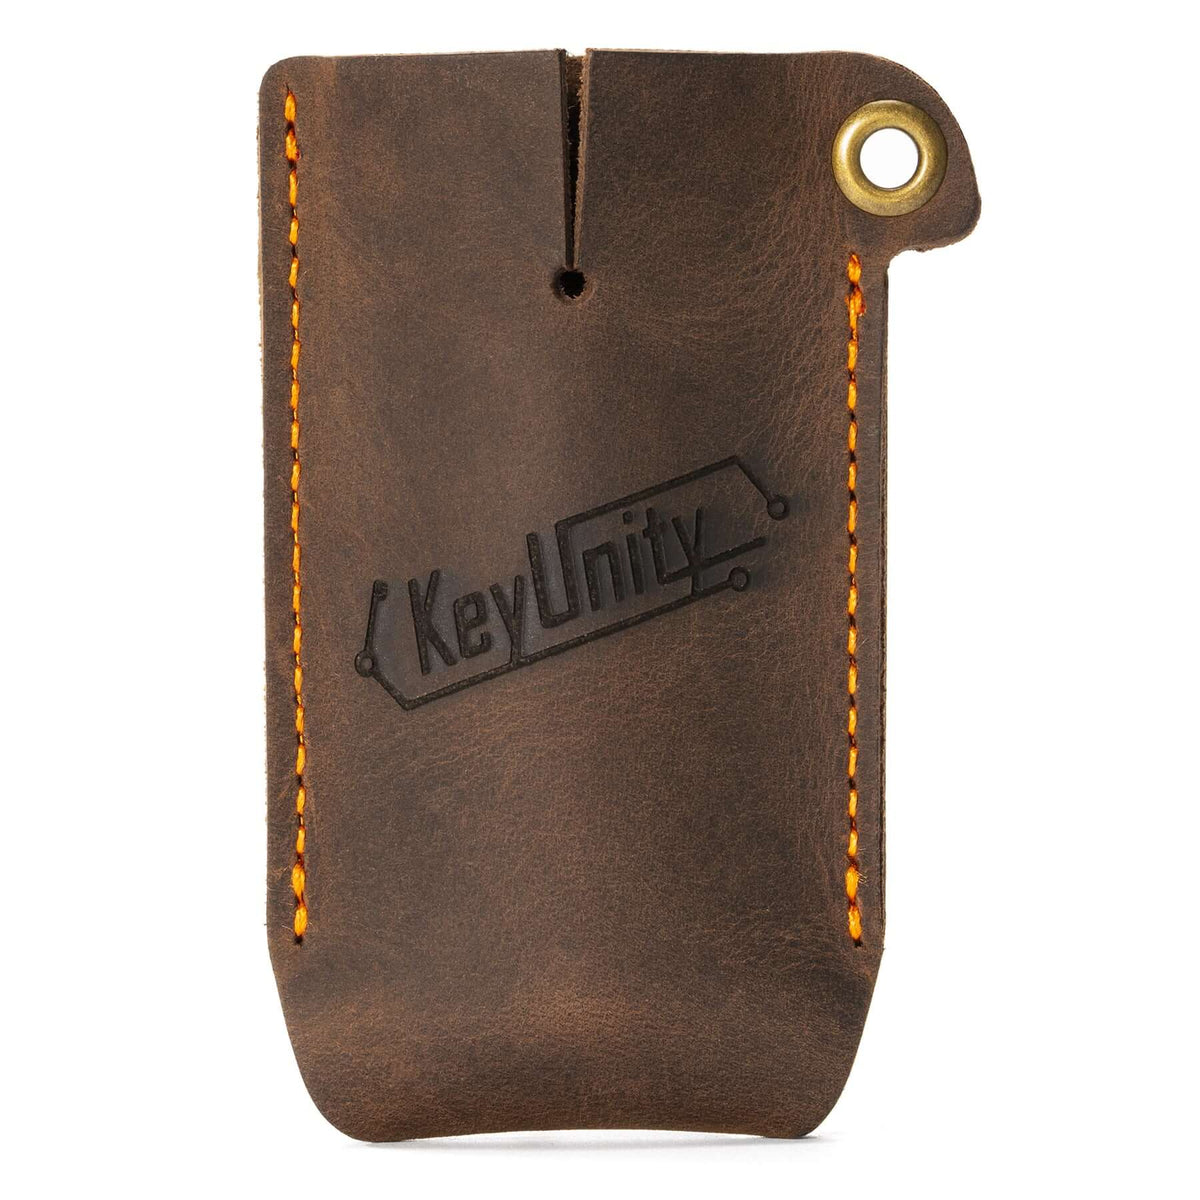 KA16 Leather Sheath EDC Pocket Organizer Hand Stitched Slip Pouch